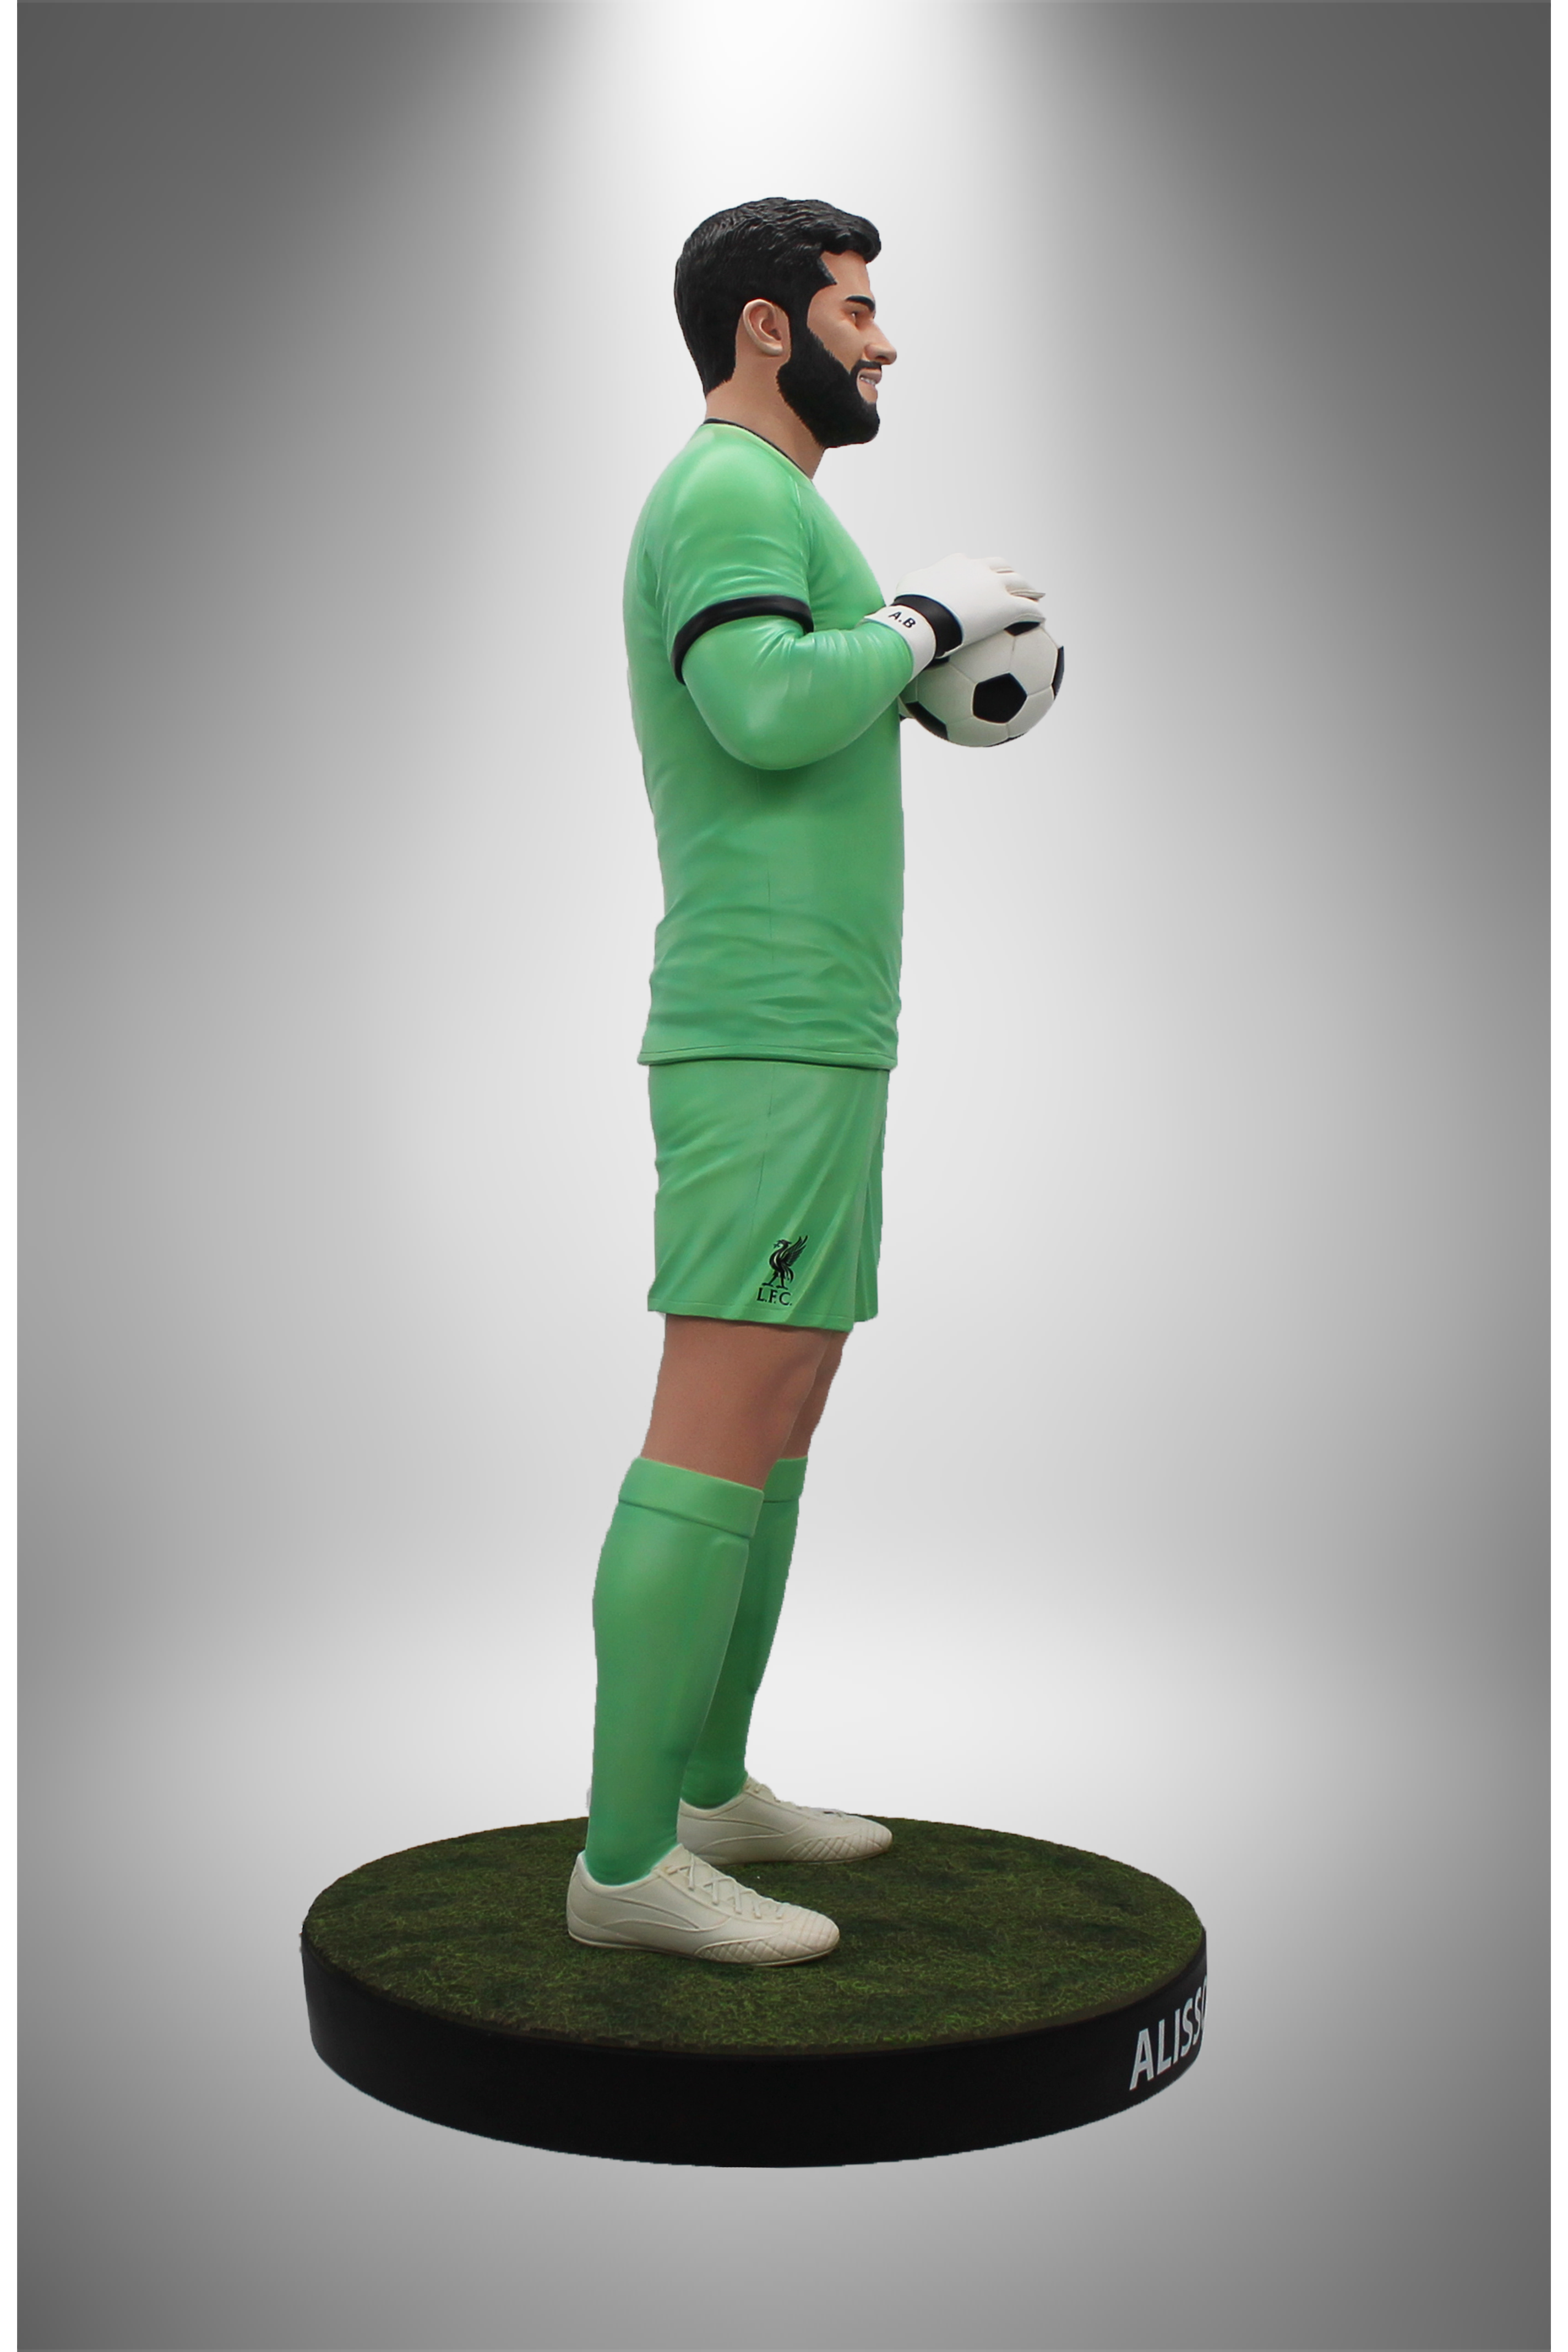 Marco Verratti - Official PSG - Football's Finest 60cm Resin Statue –  Footballs Finest (UK)